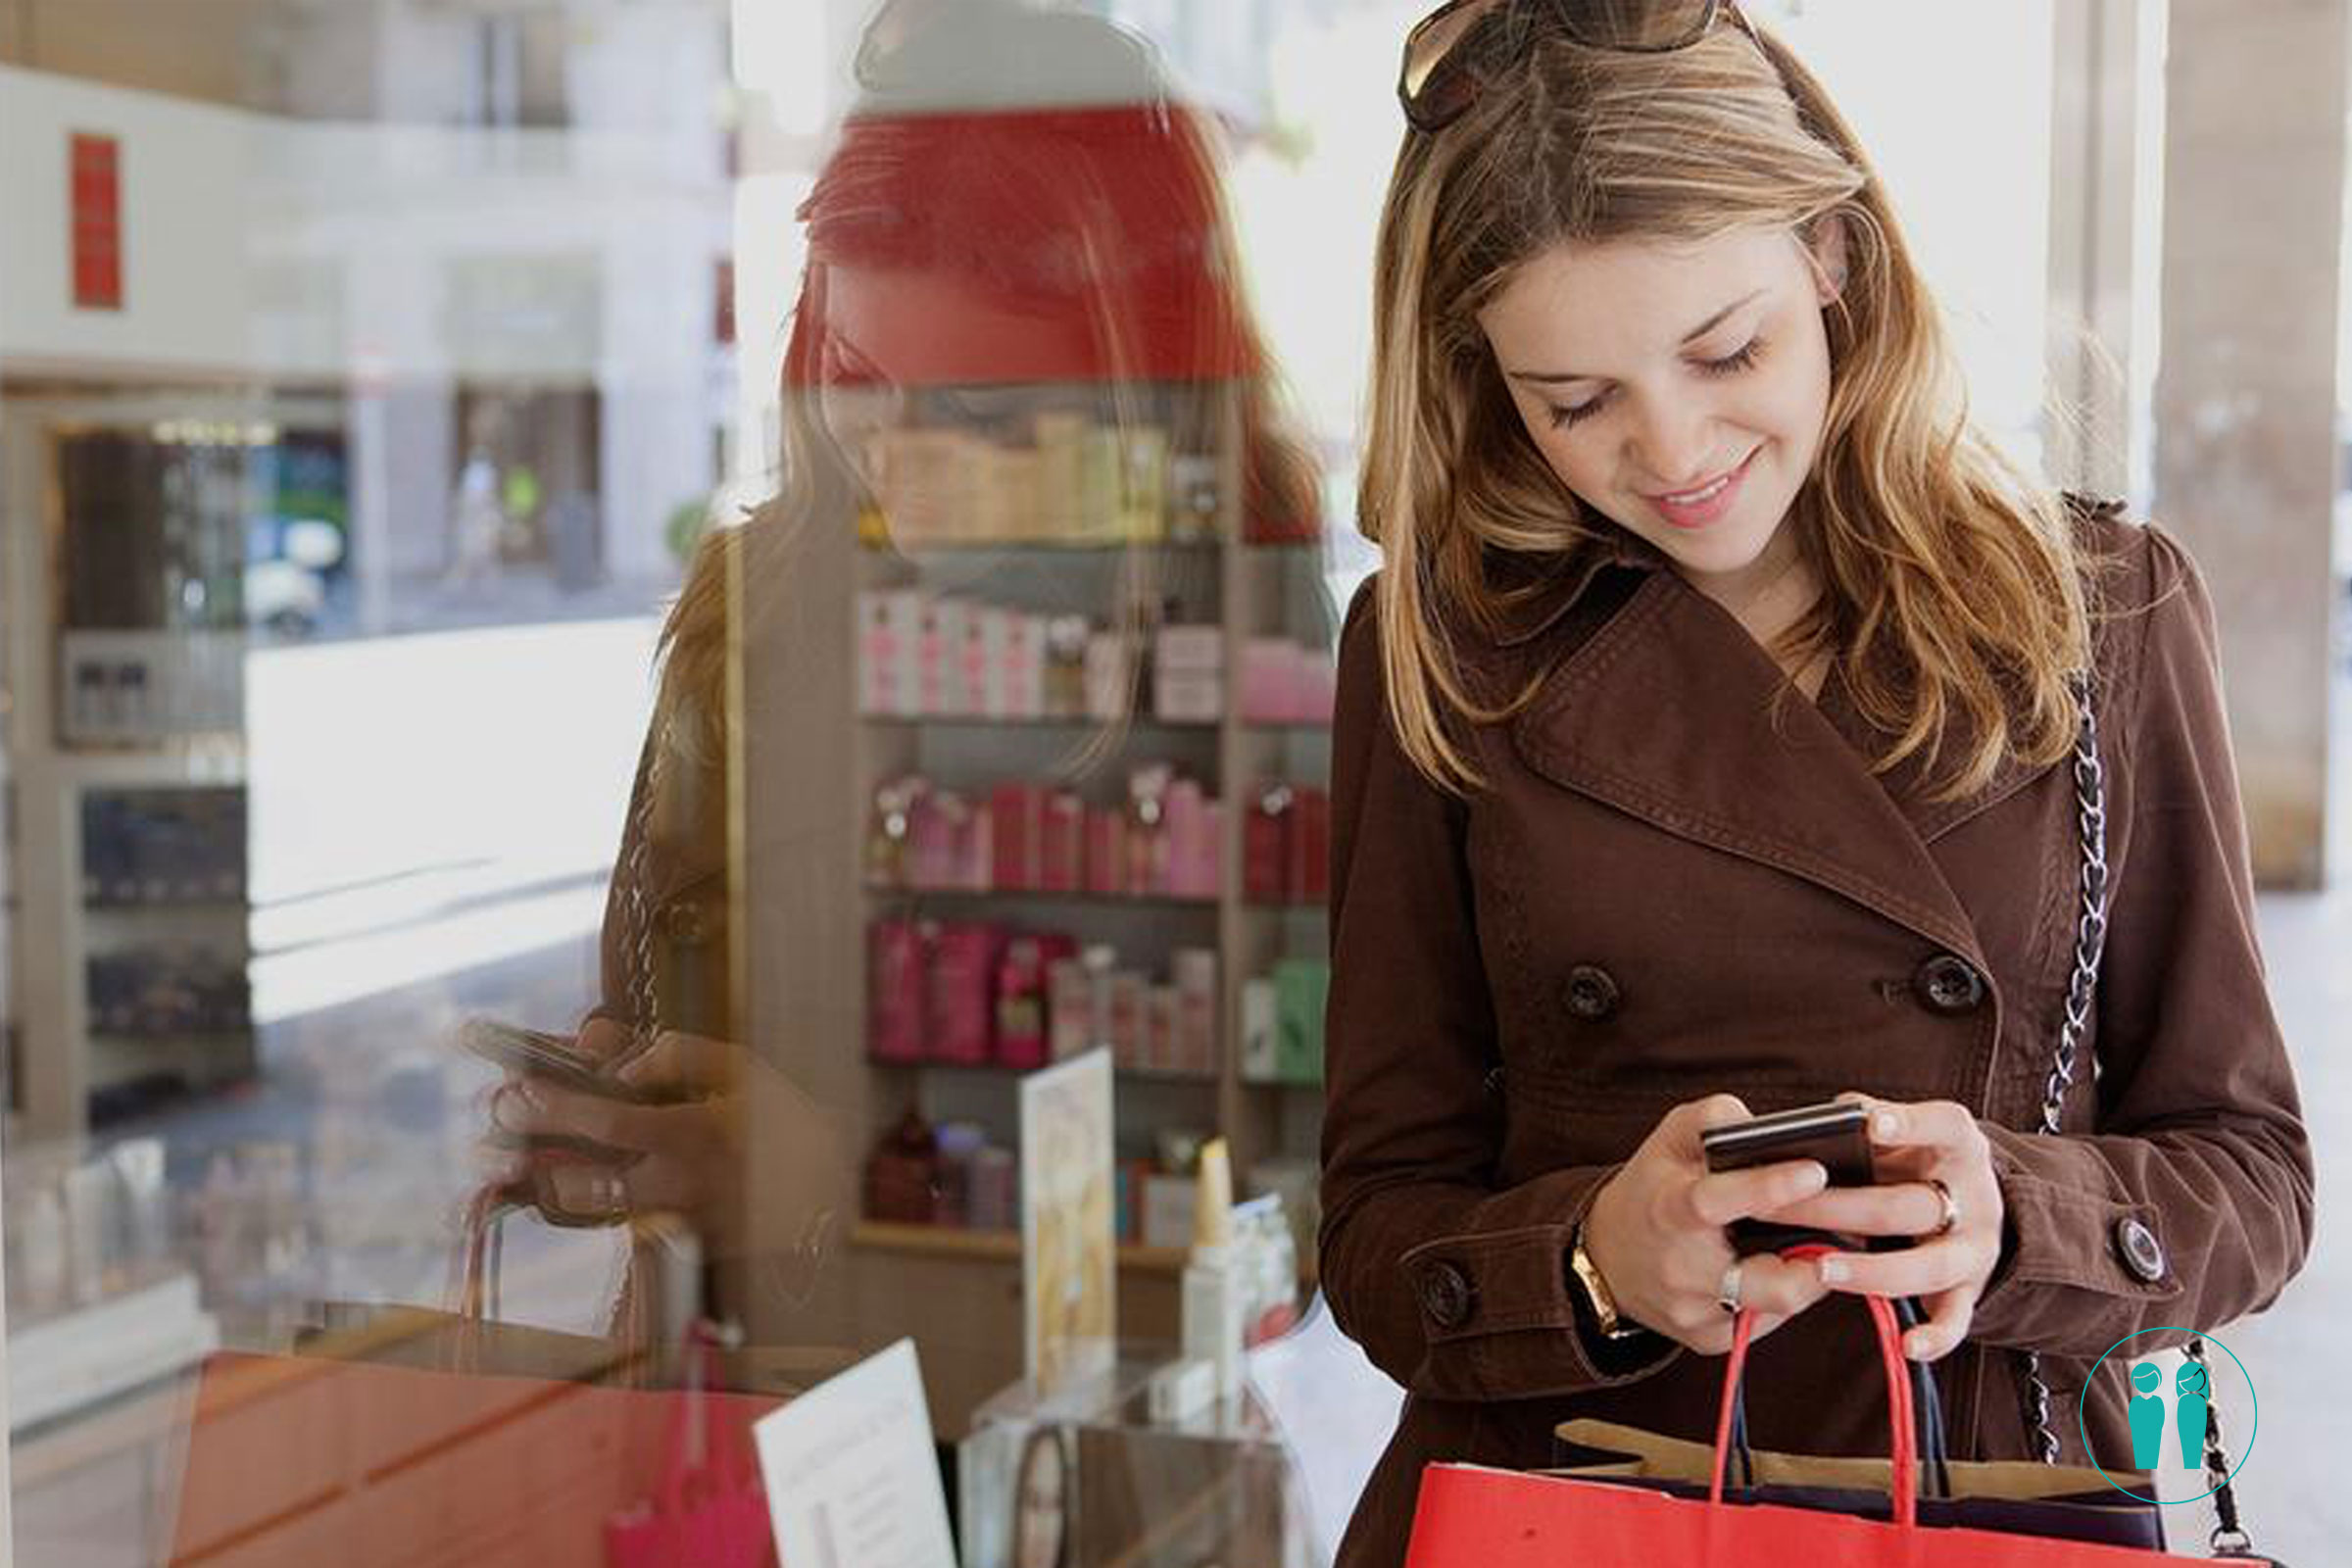 Visit store. Шоппинг. Офлайн шоппинг. Девушка с телефоном в руках на шопинге. Грамотный шоппинг.